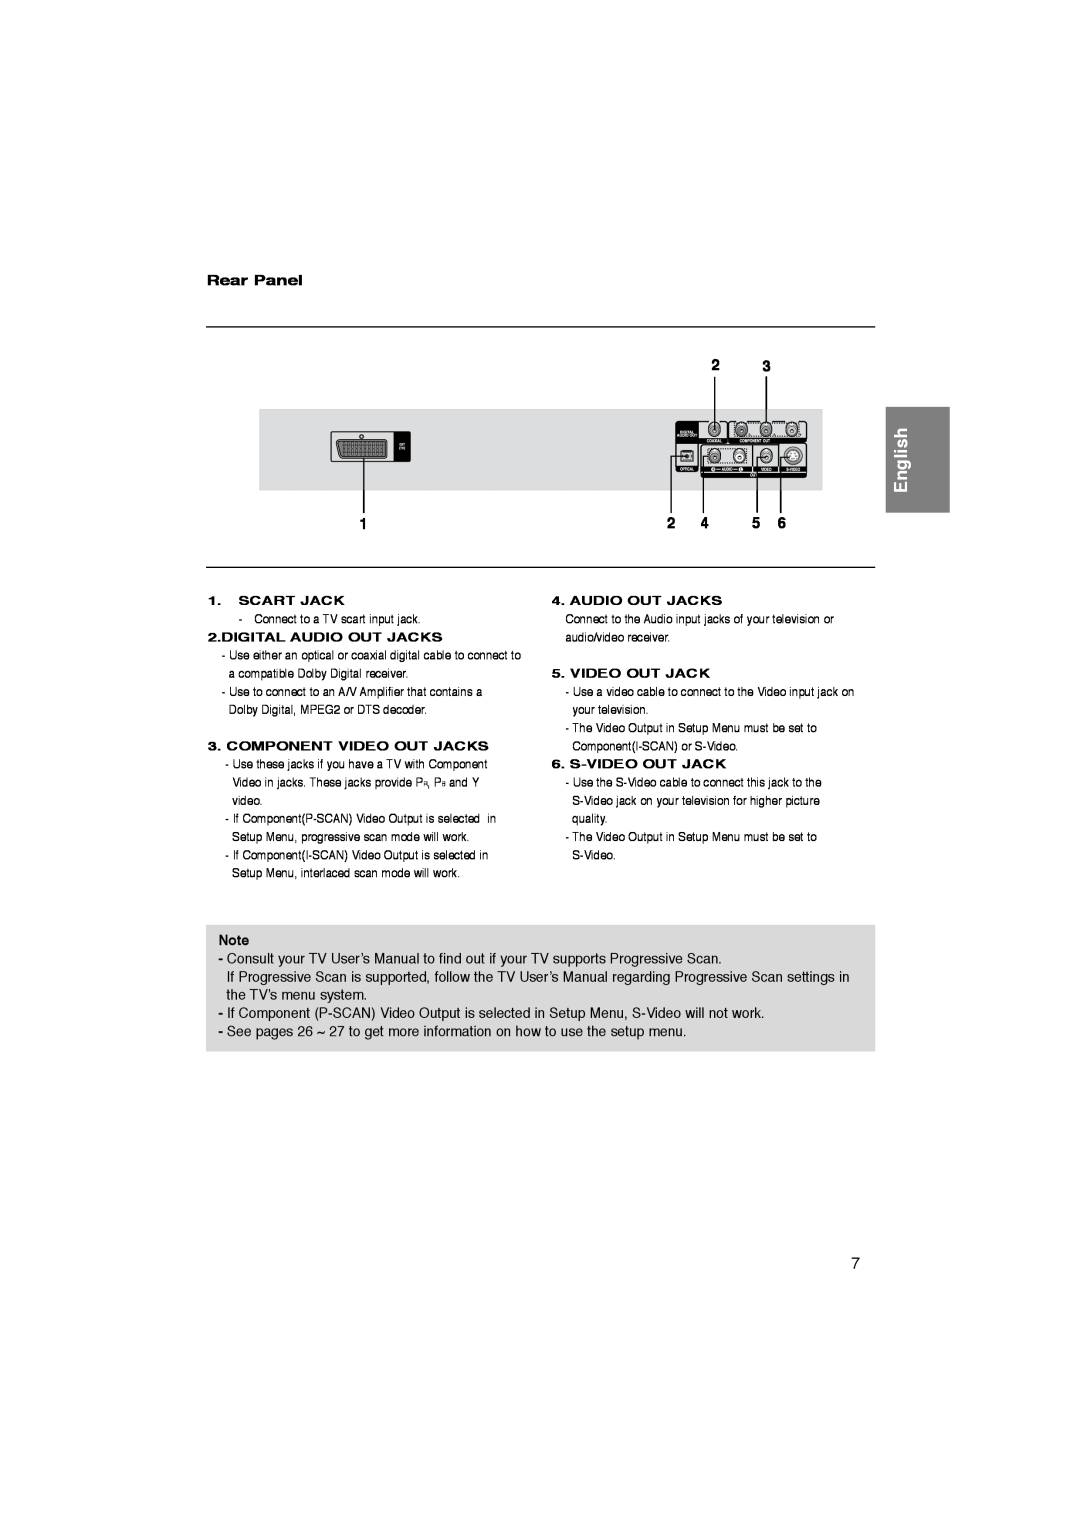 Samsung DVD-P260K/AFR manual Rear Panel, English, Scart Jack, Digital Audio Out Jacks, Component Video Out Jacks 